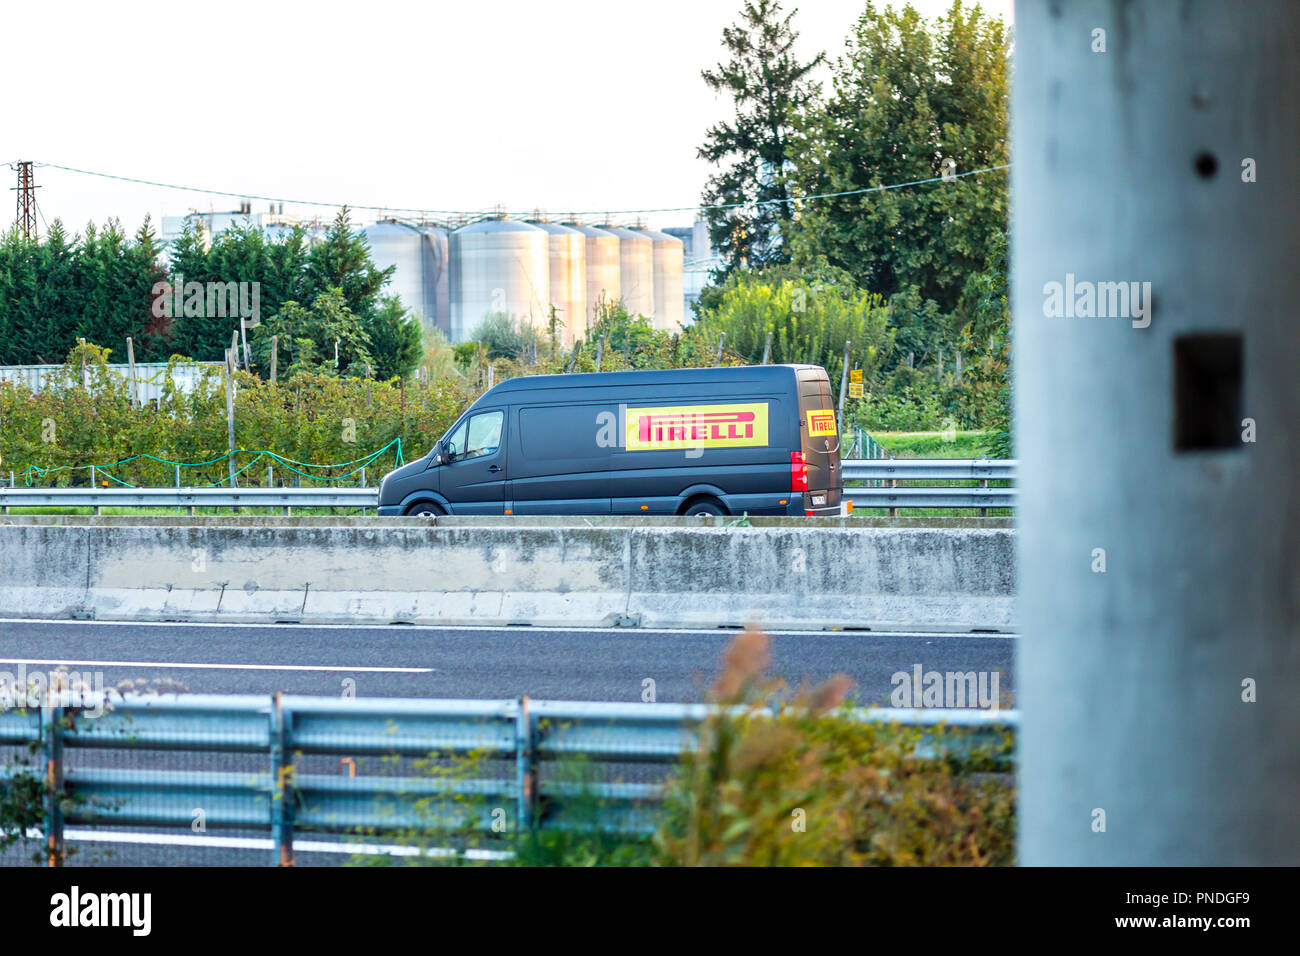 FAENZA (RA), ITALY - SEPTEMBER 20, 2018: van with PIRELLI logo running on highway Stock Photo